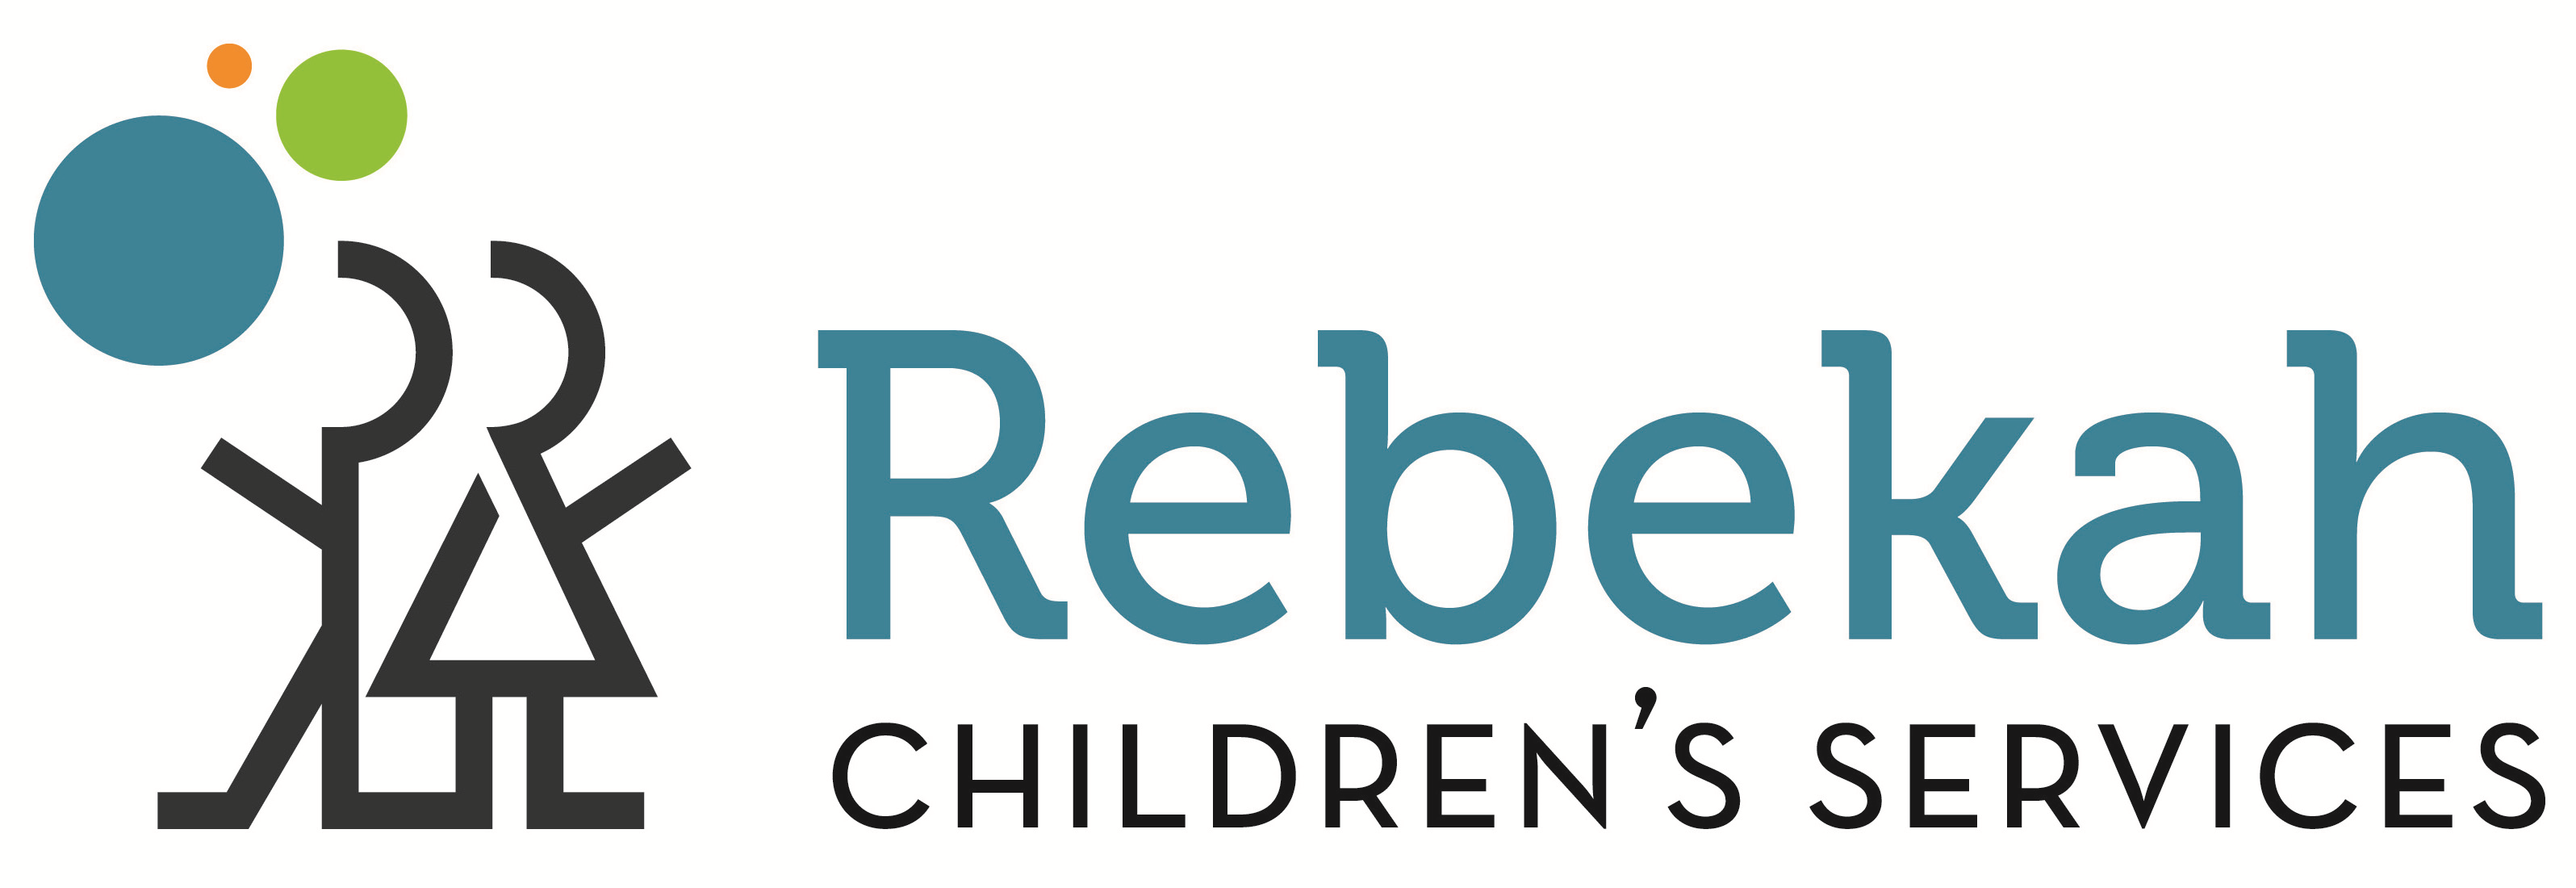 Rebekah Children's Services Company Logo